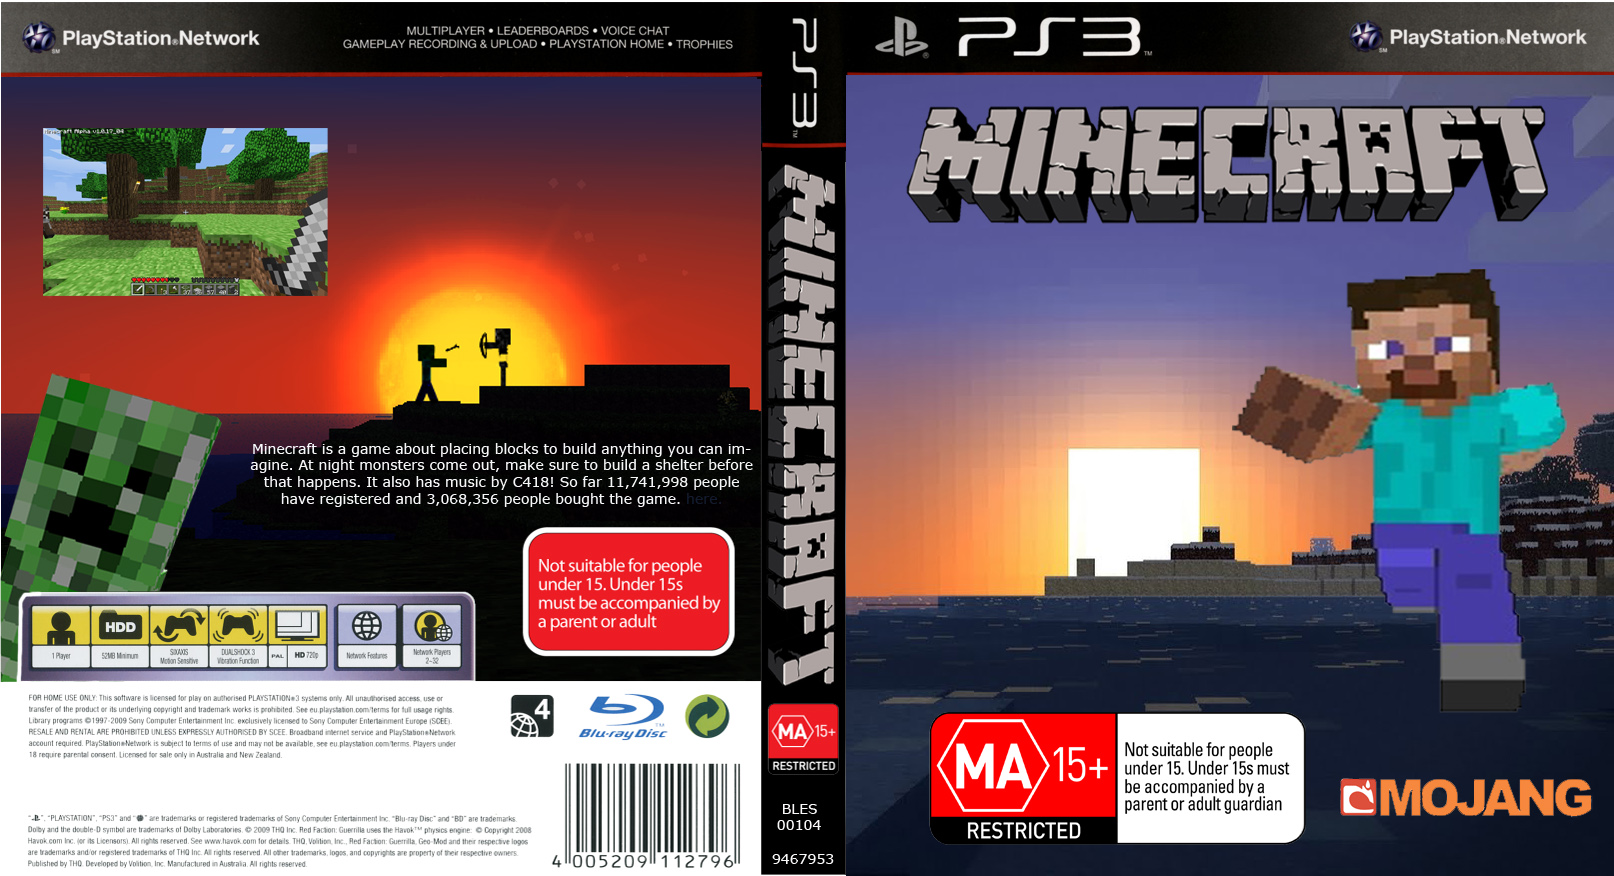 Minecraft Ps3 Cover by knobby14.deviantart.com on @deviantART